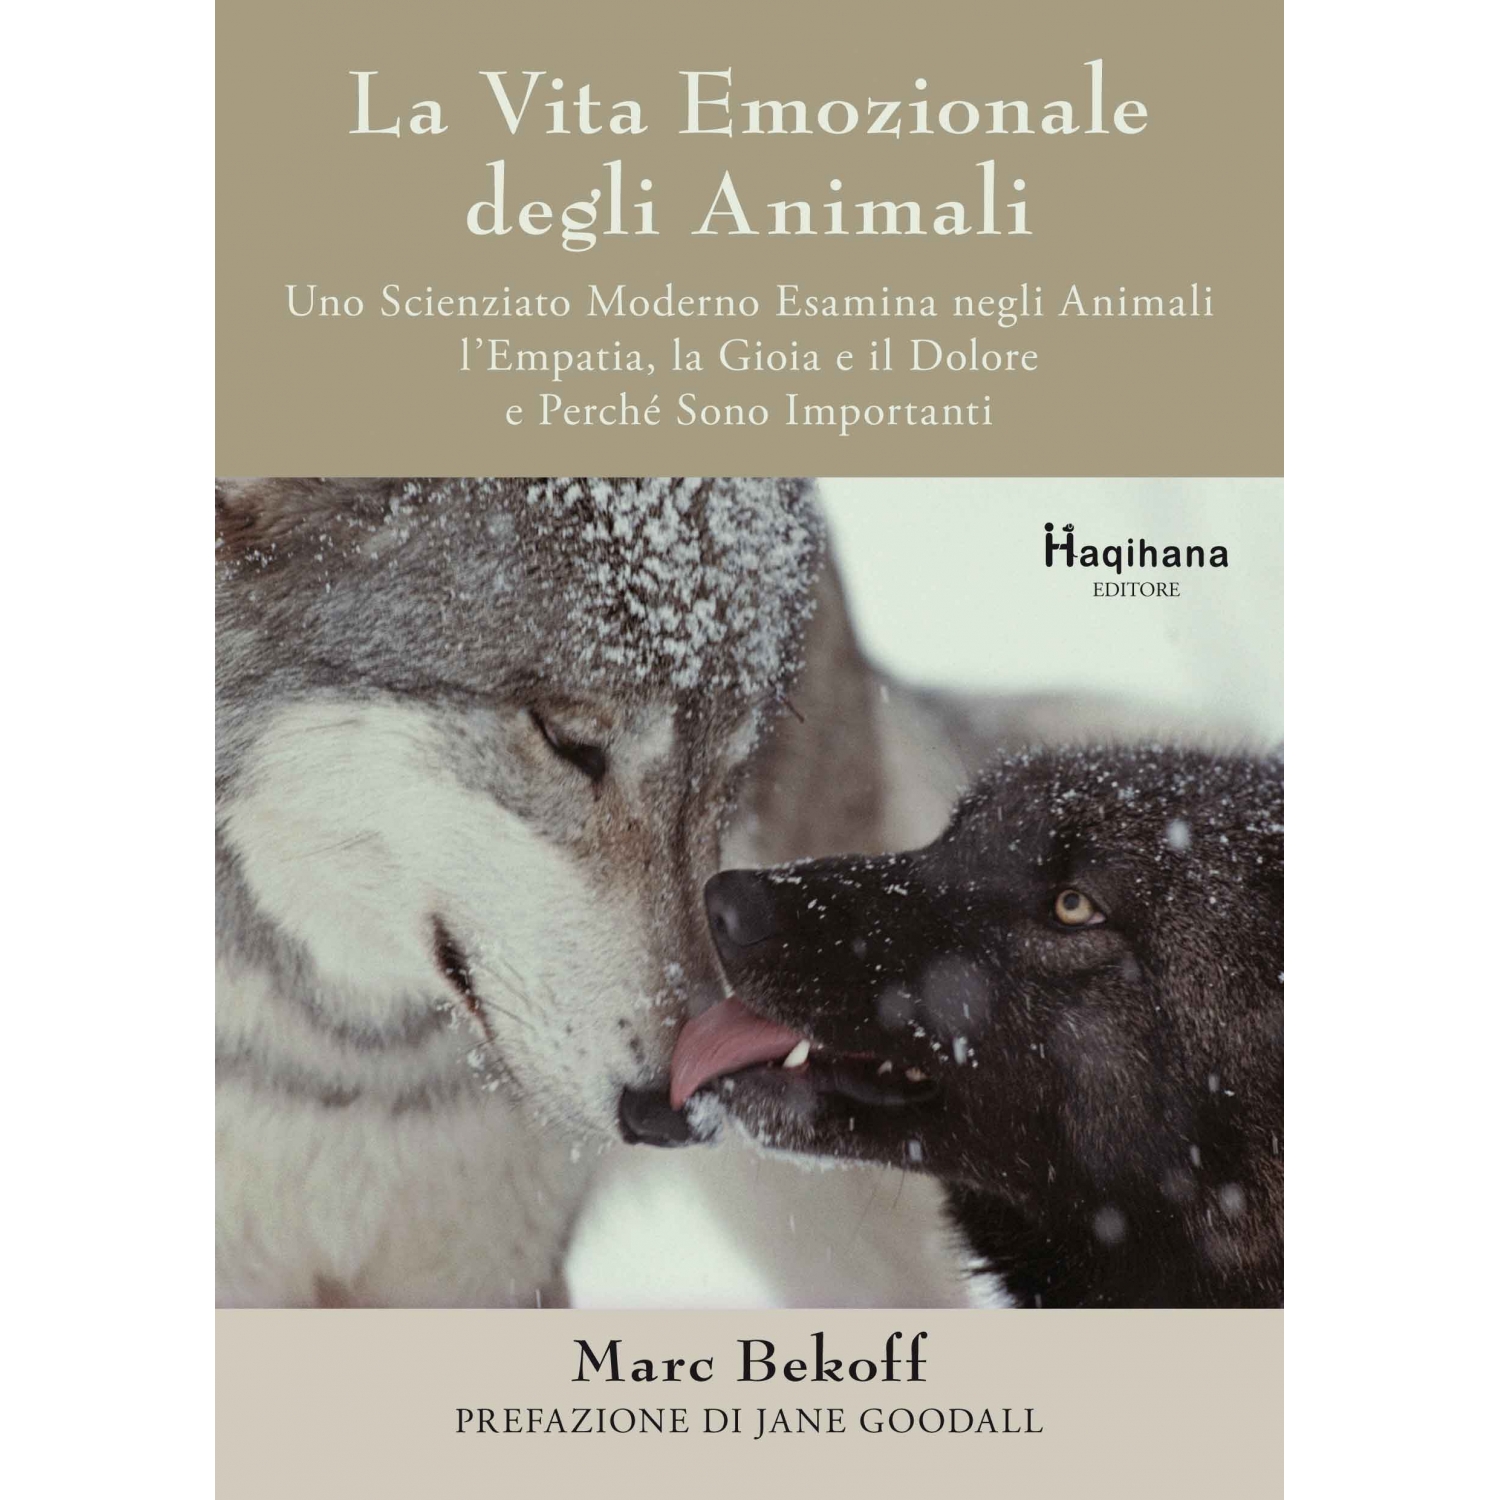 La vita emozionale degli animali